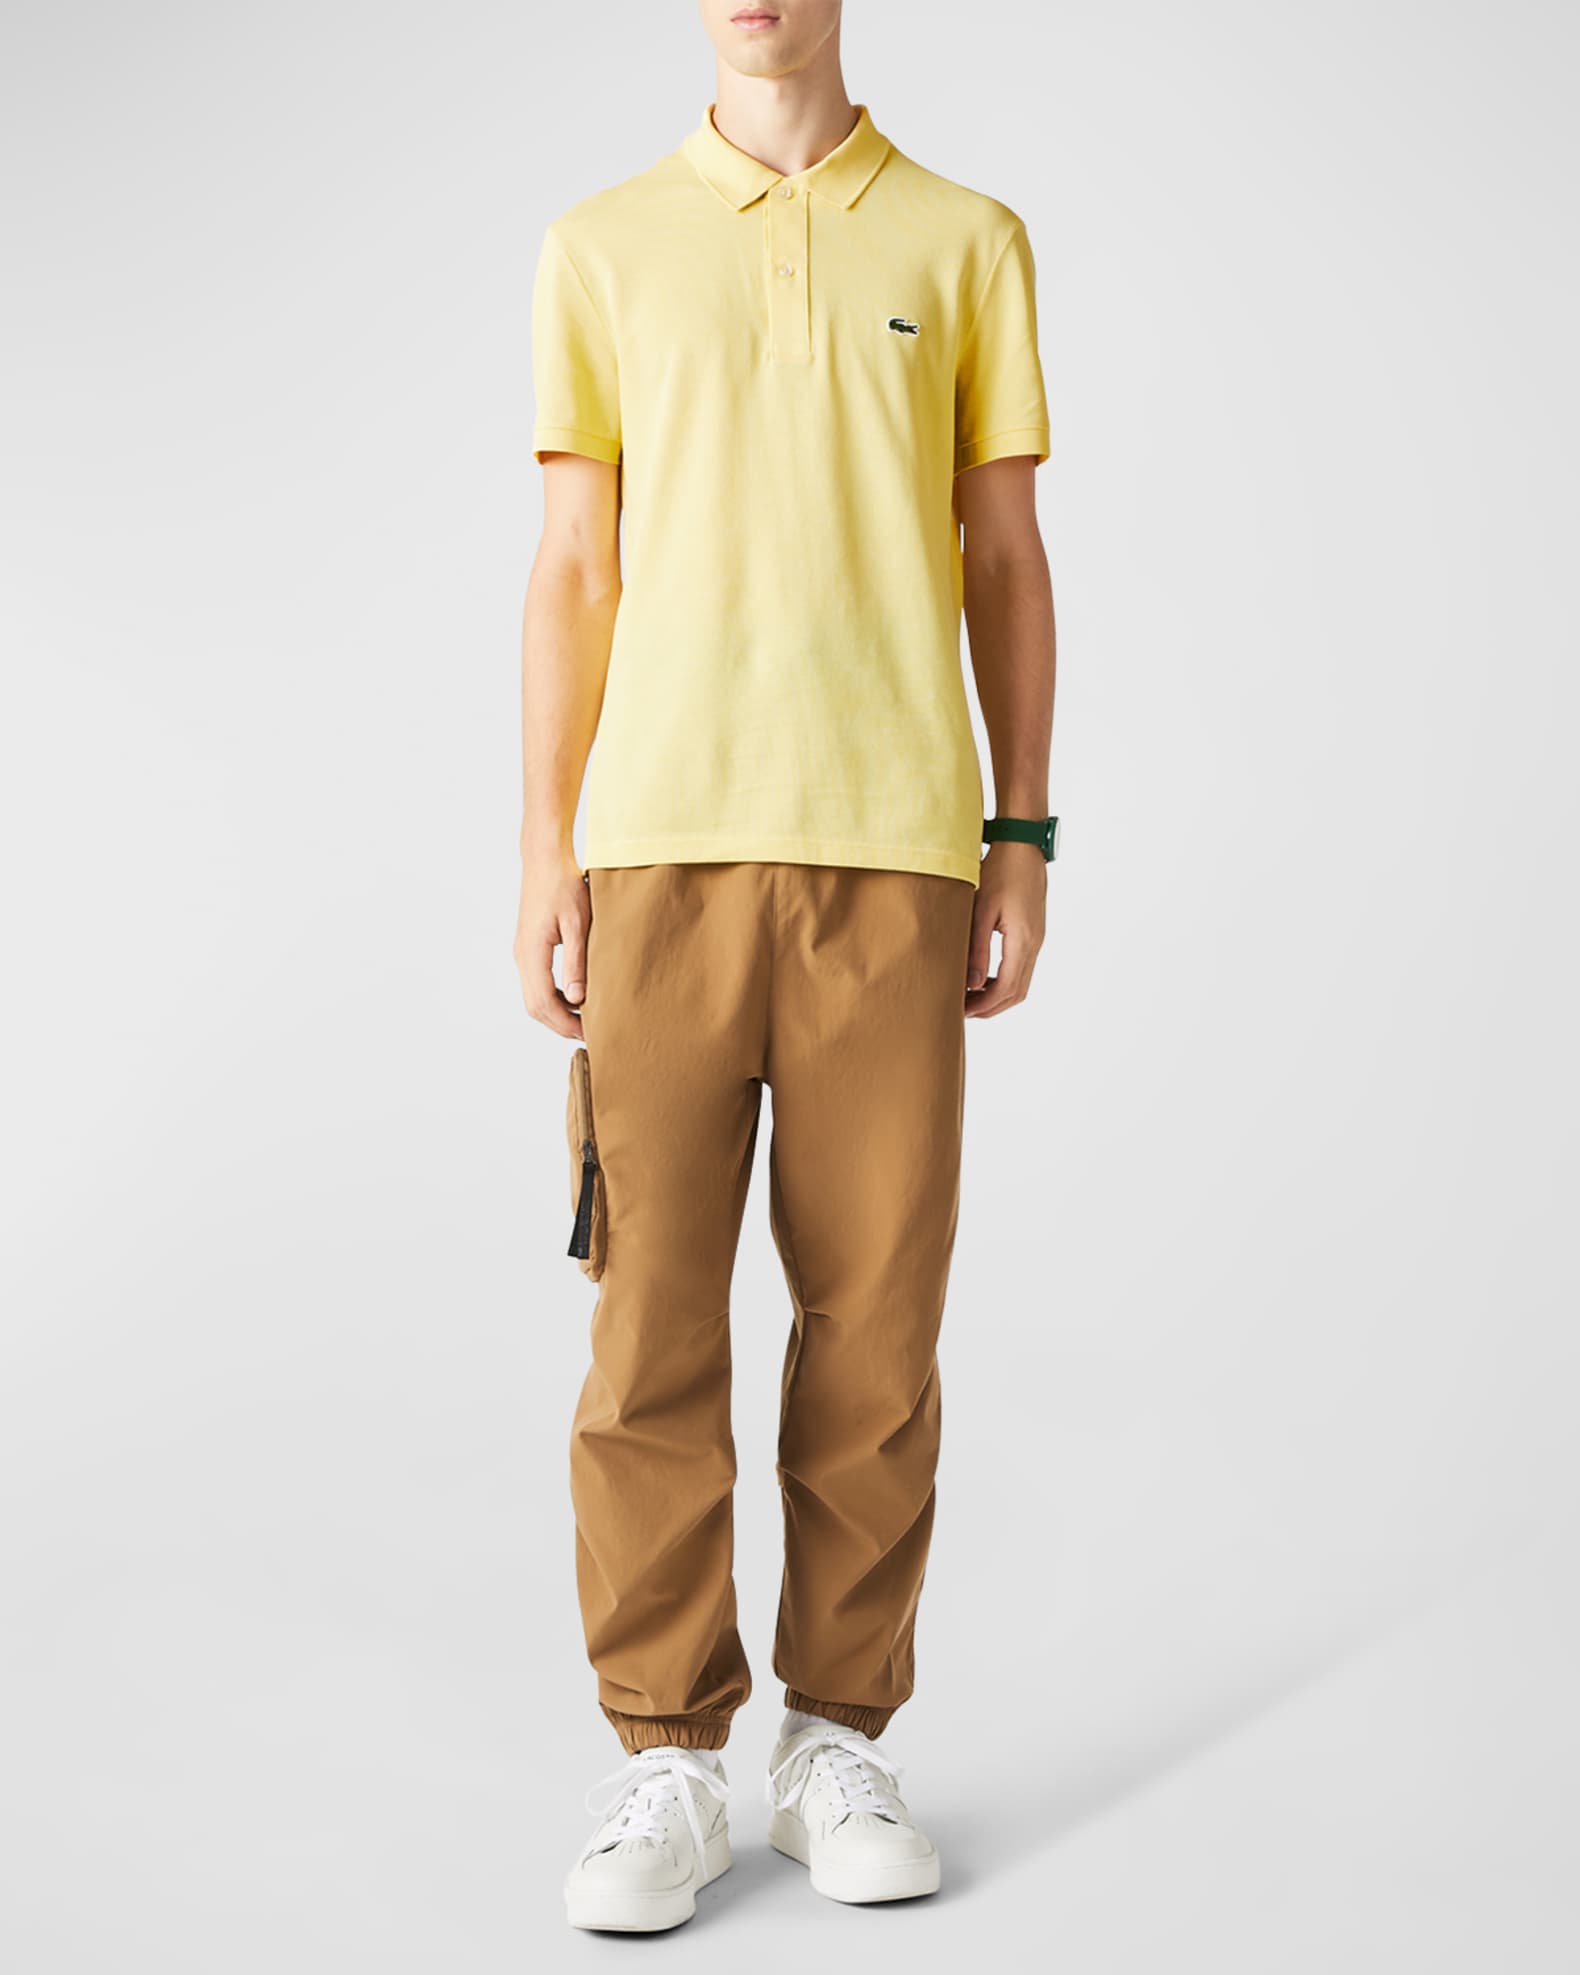 Lacoste Men's Signature Polo Shirt | Neiman Marcus